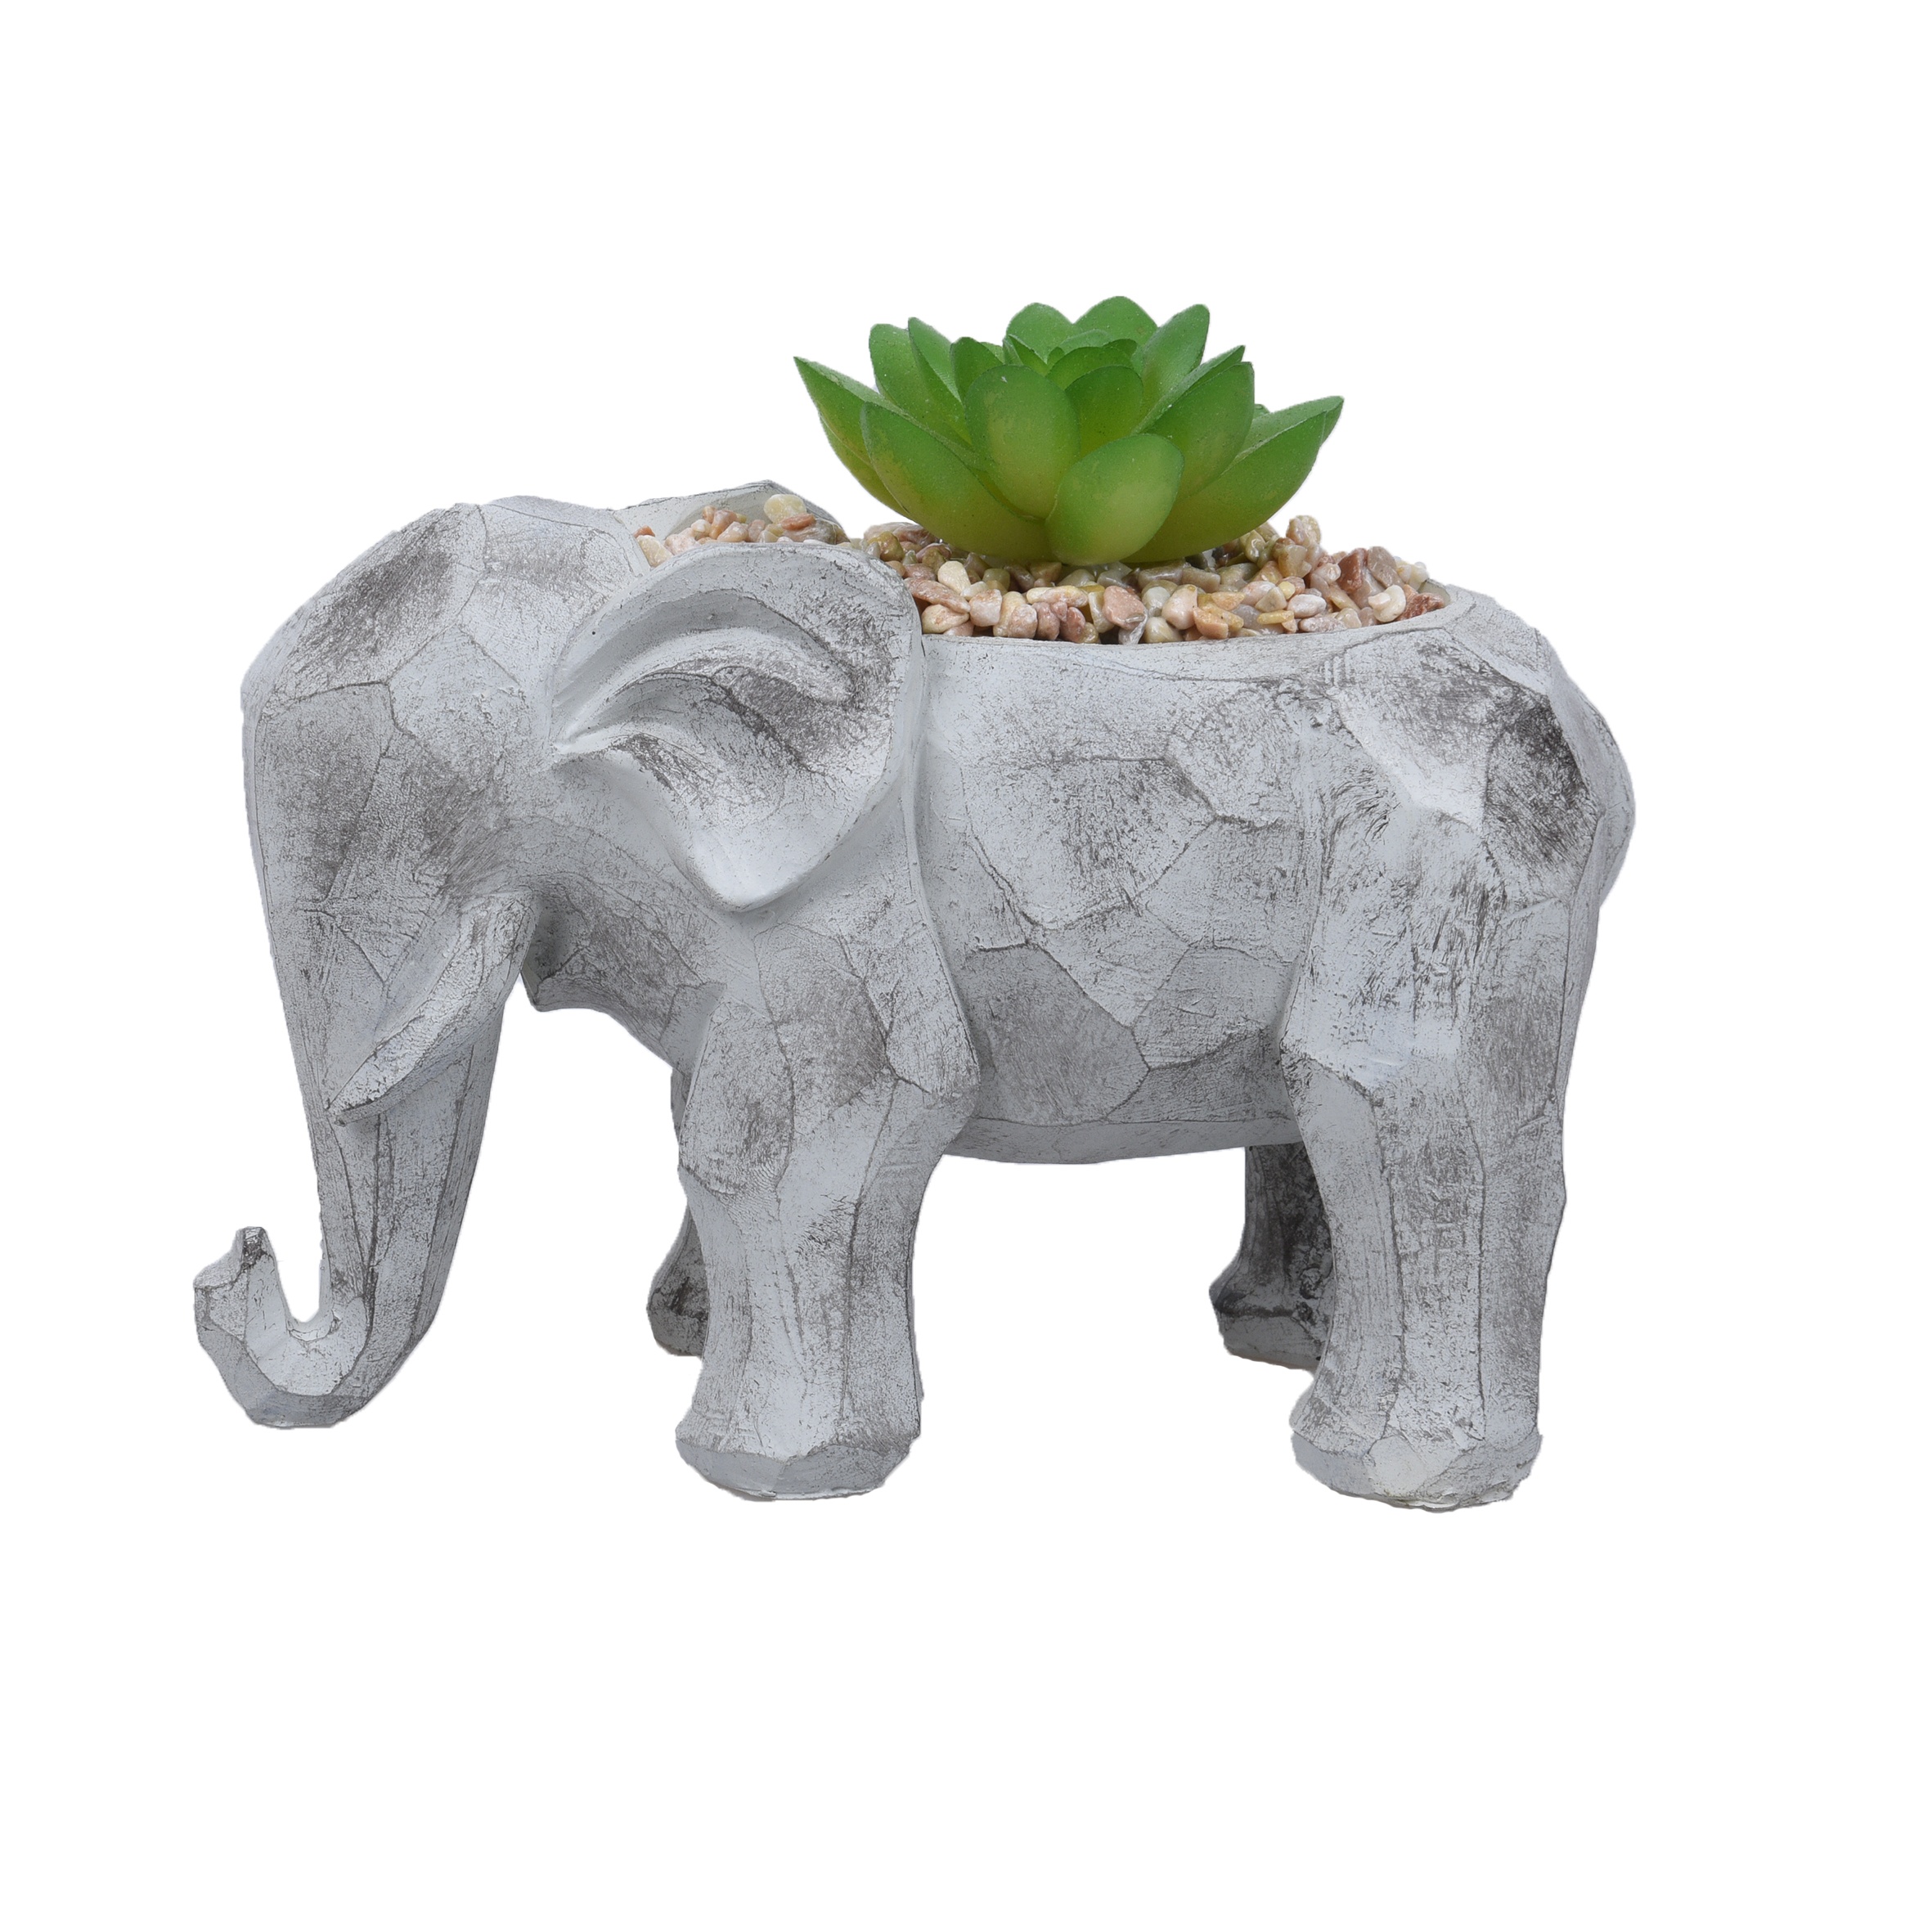 green plants artificial with metal pots plant for flower pots & planters elephant shape